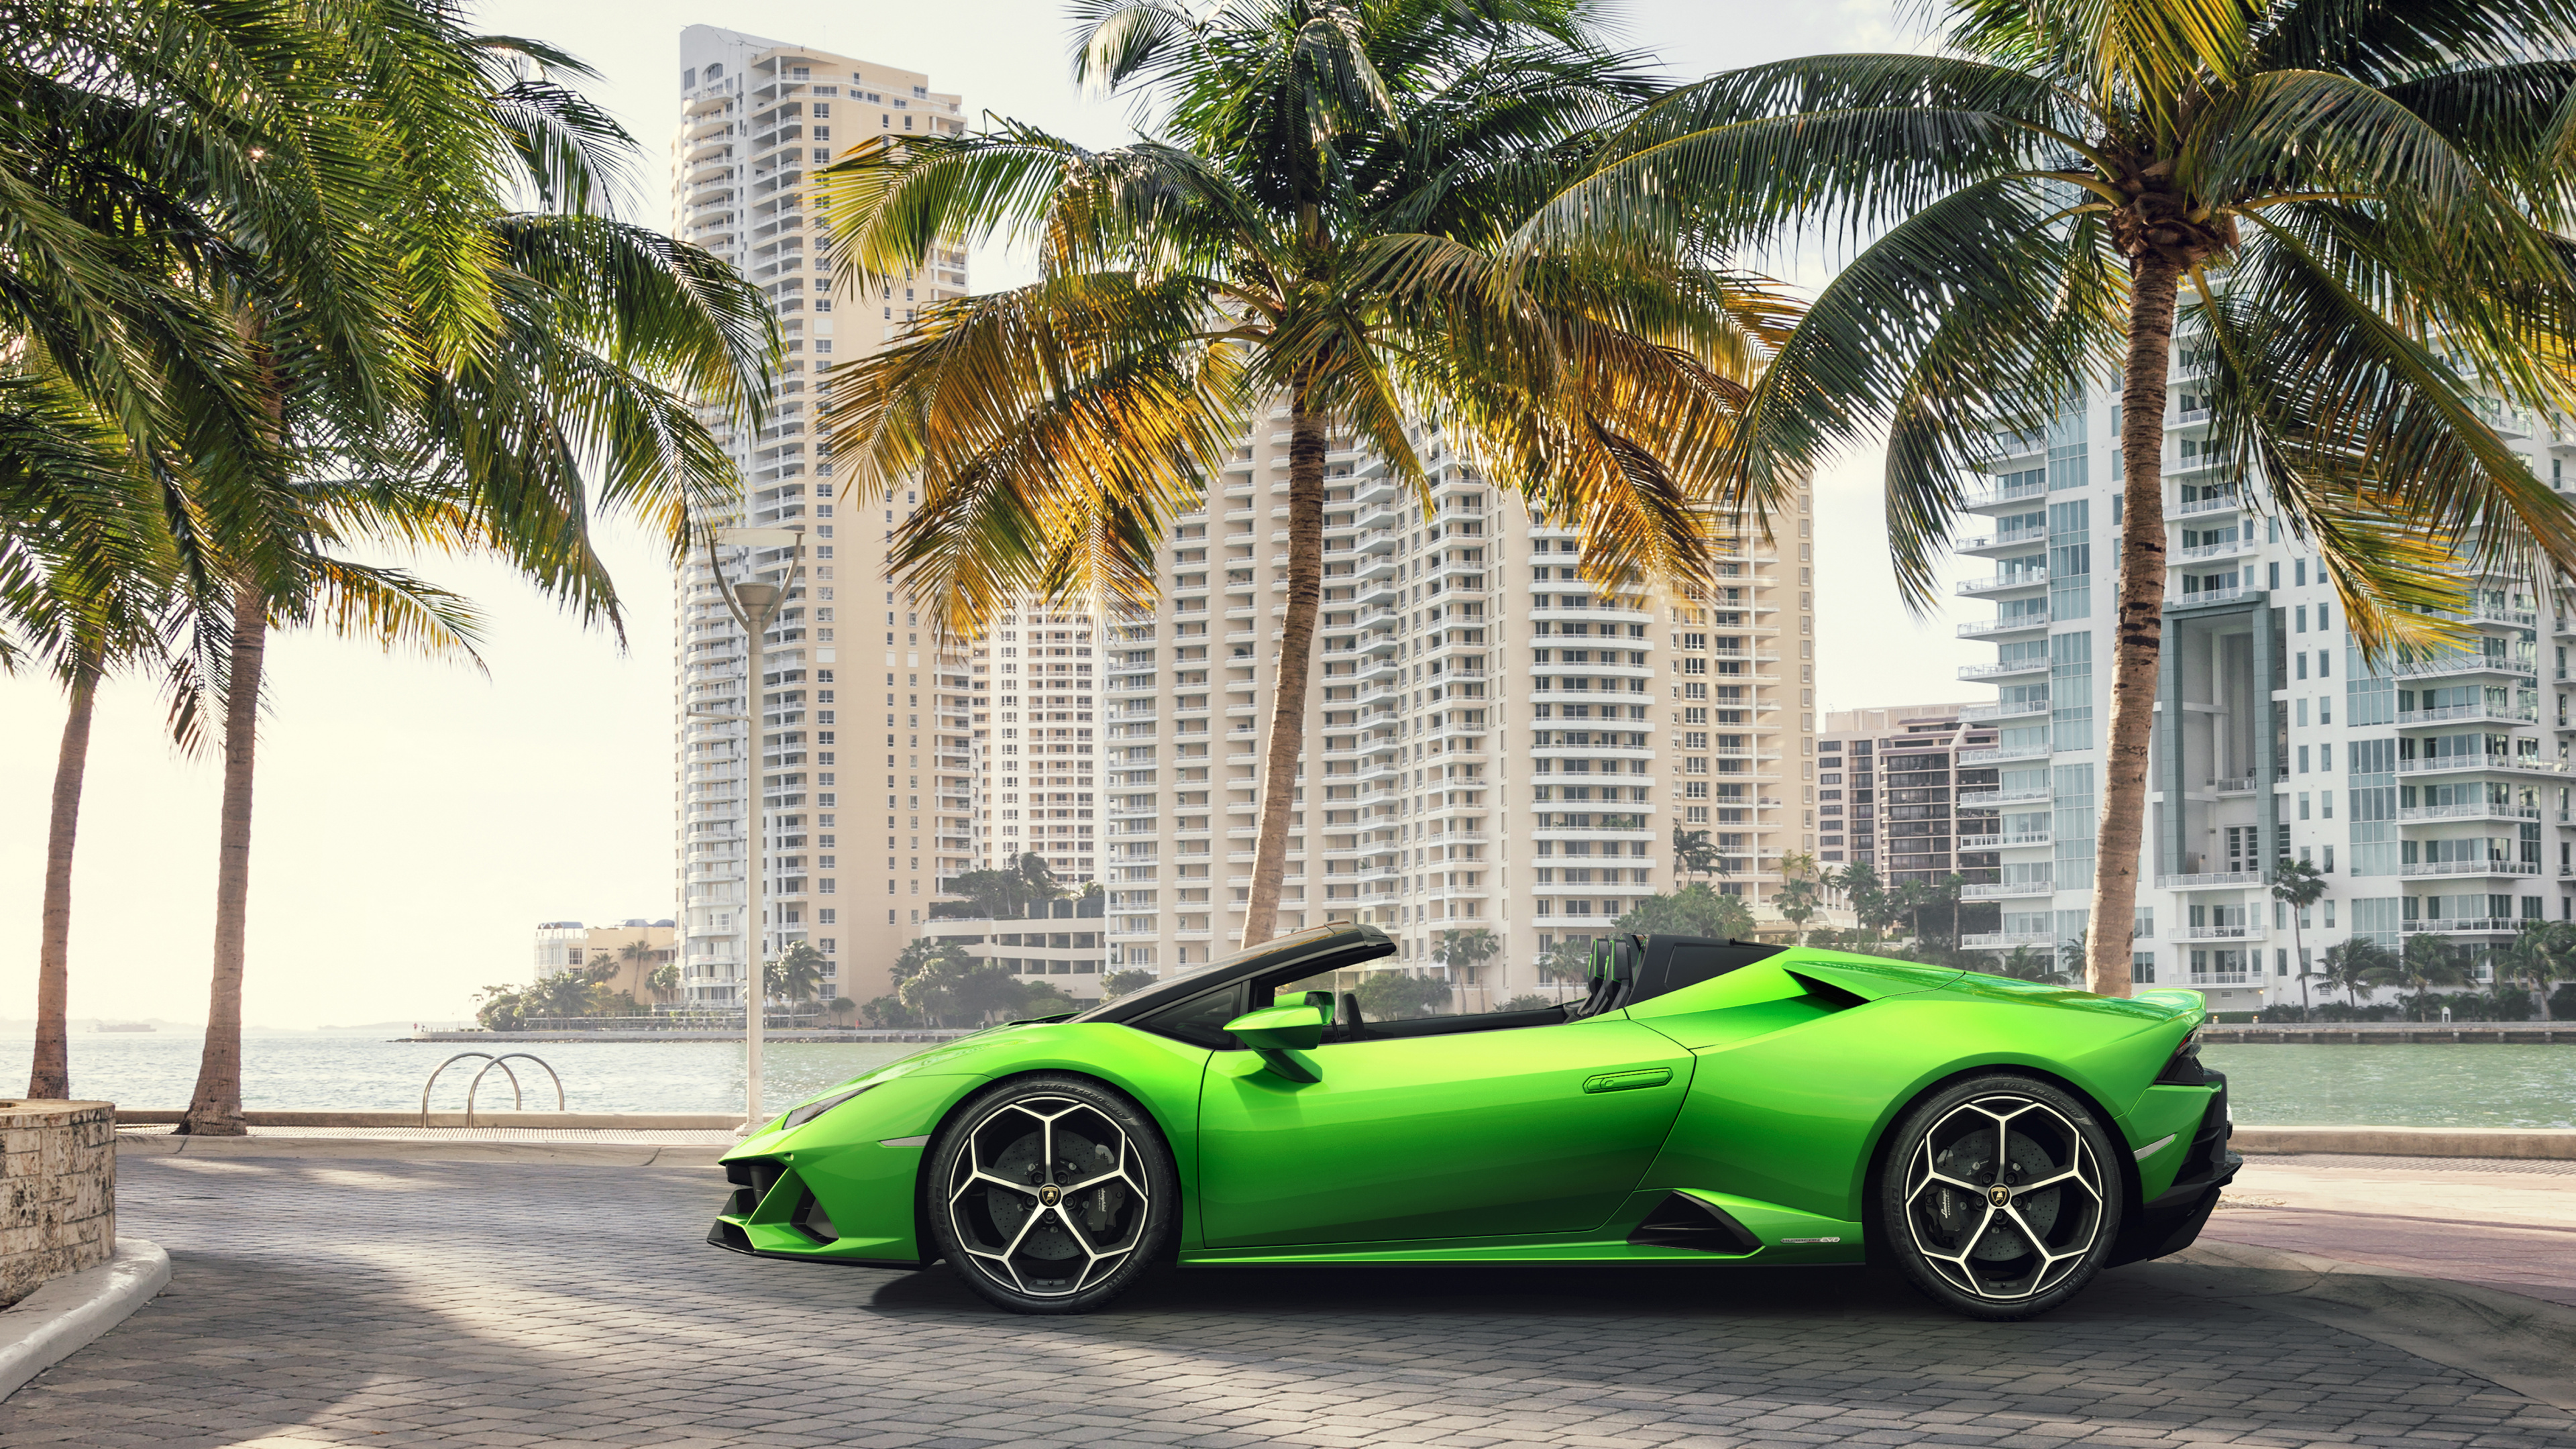 Green Ferrari Sports Car on Road During Daytime. Wallpaper in 3840x2160 Resolution